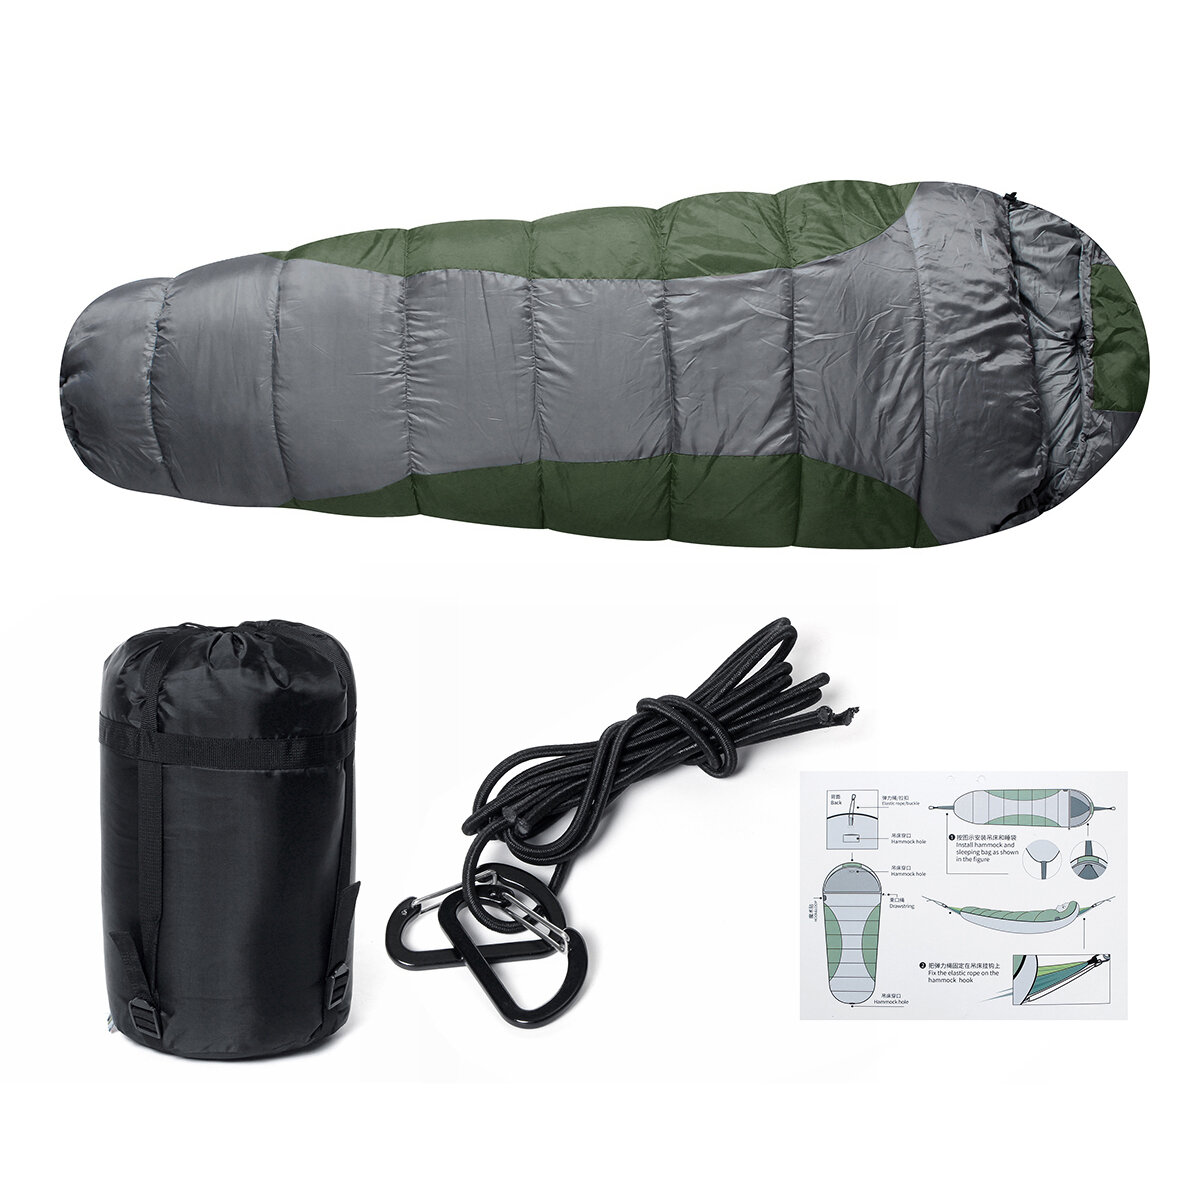 Bolsa de dormir individual de poliéster impermeable 210T de 230x50cm para acampar y viajar al aire libre.